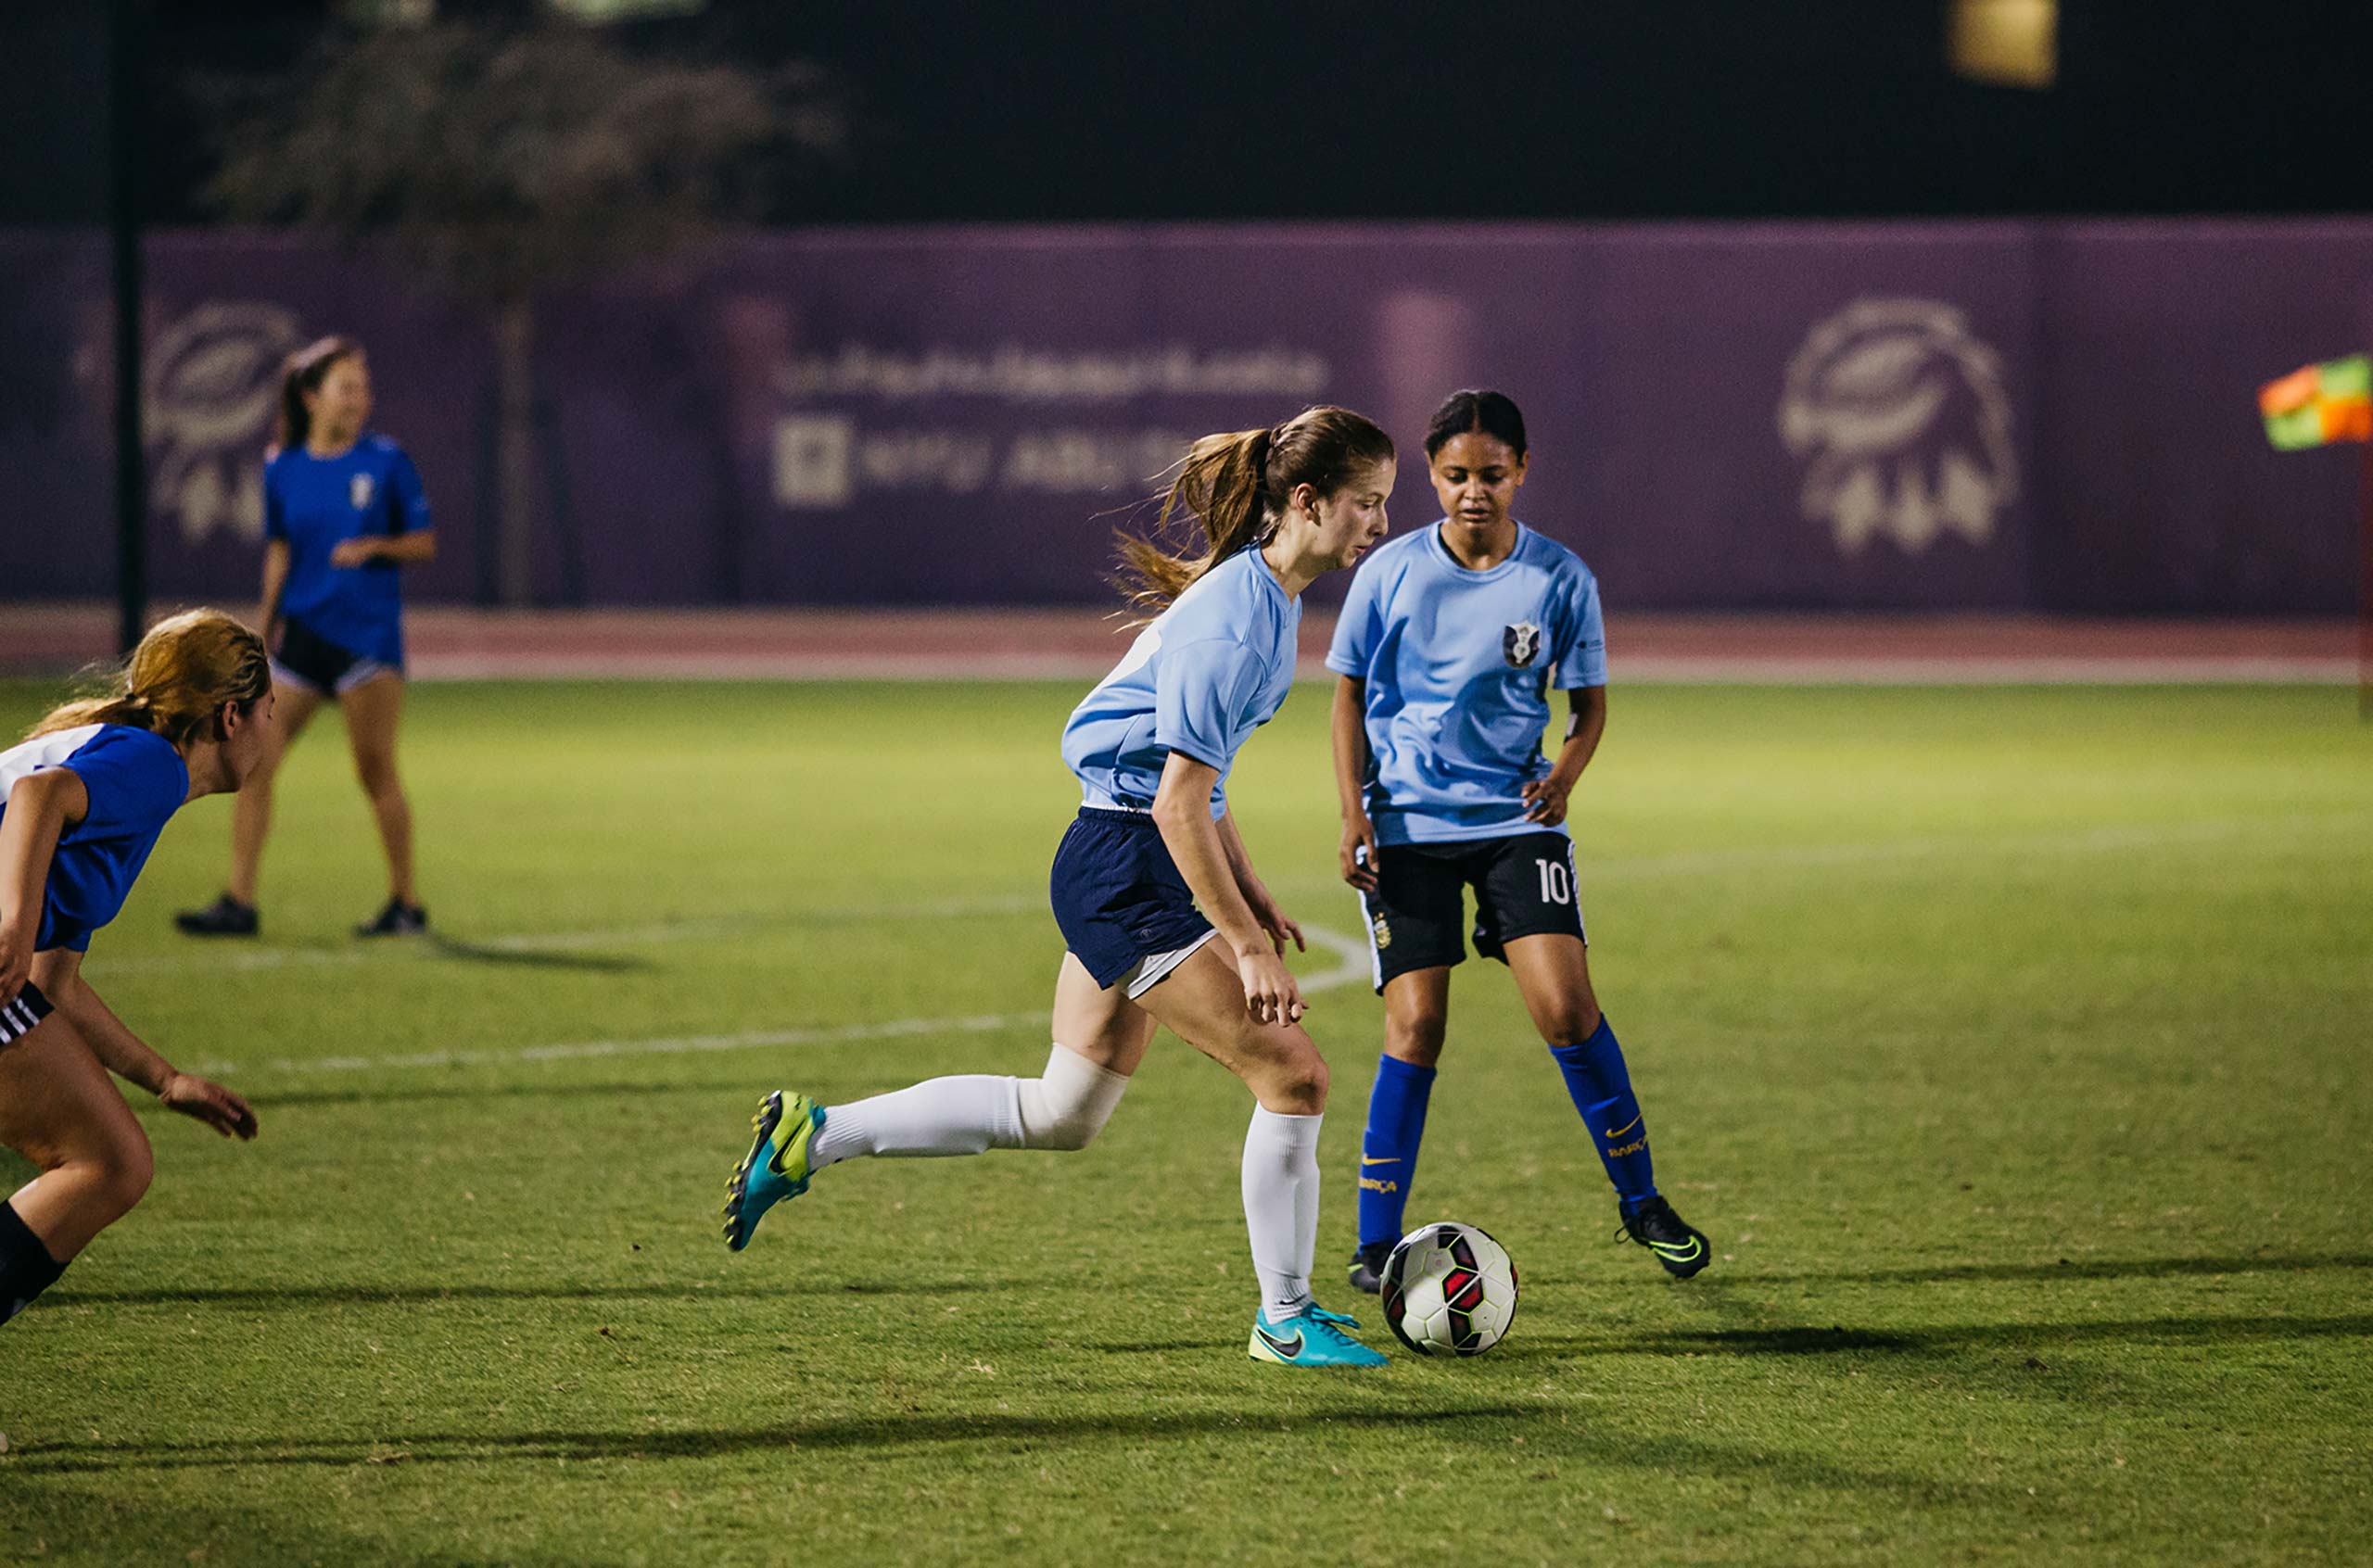 NYU Abu Dhabi women's soccer team practicing